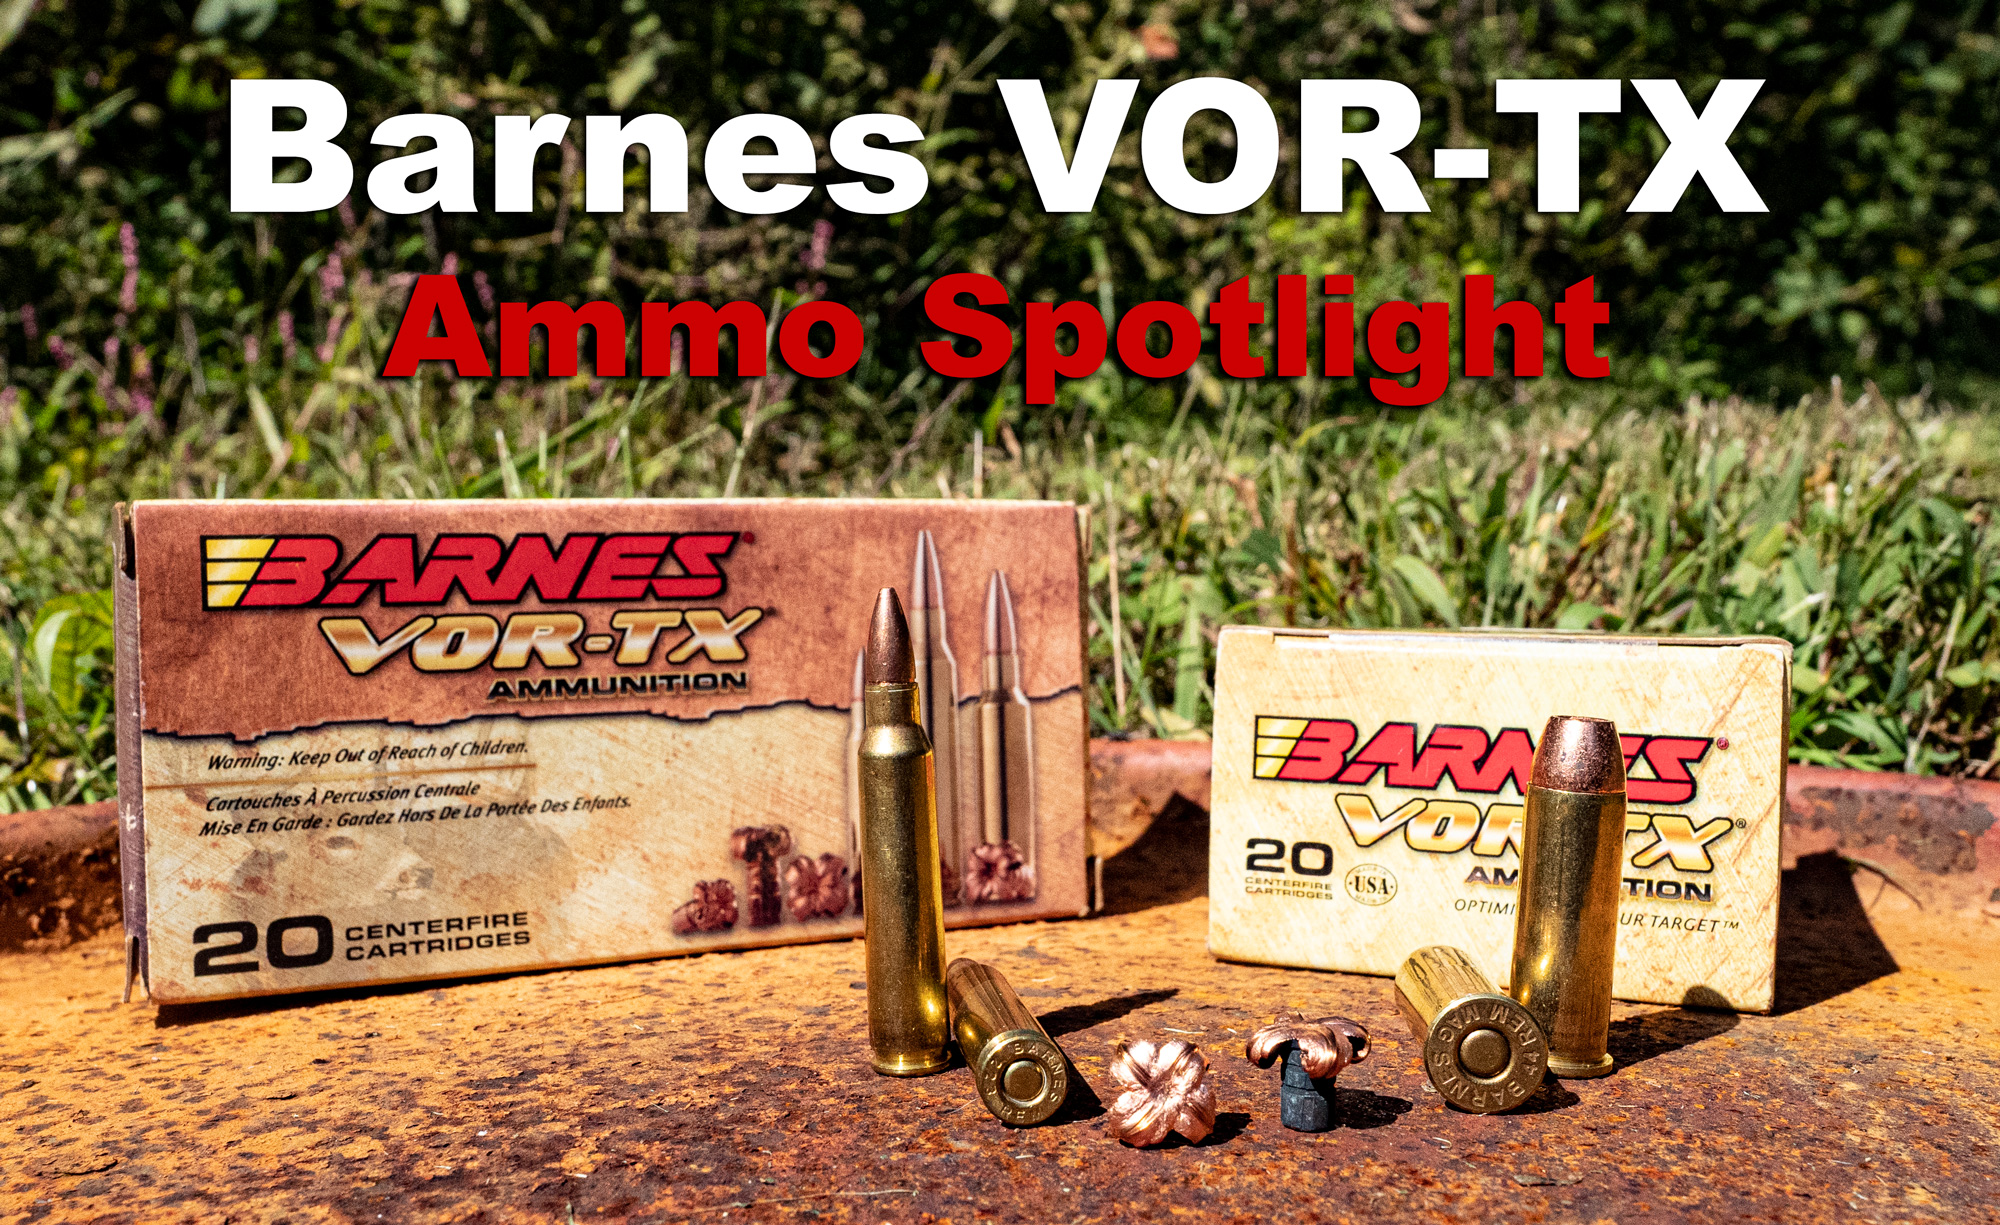 Barnes VOR-TX ammunition and boxes at a shooting range